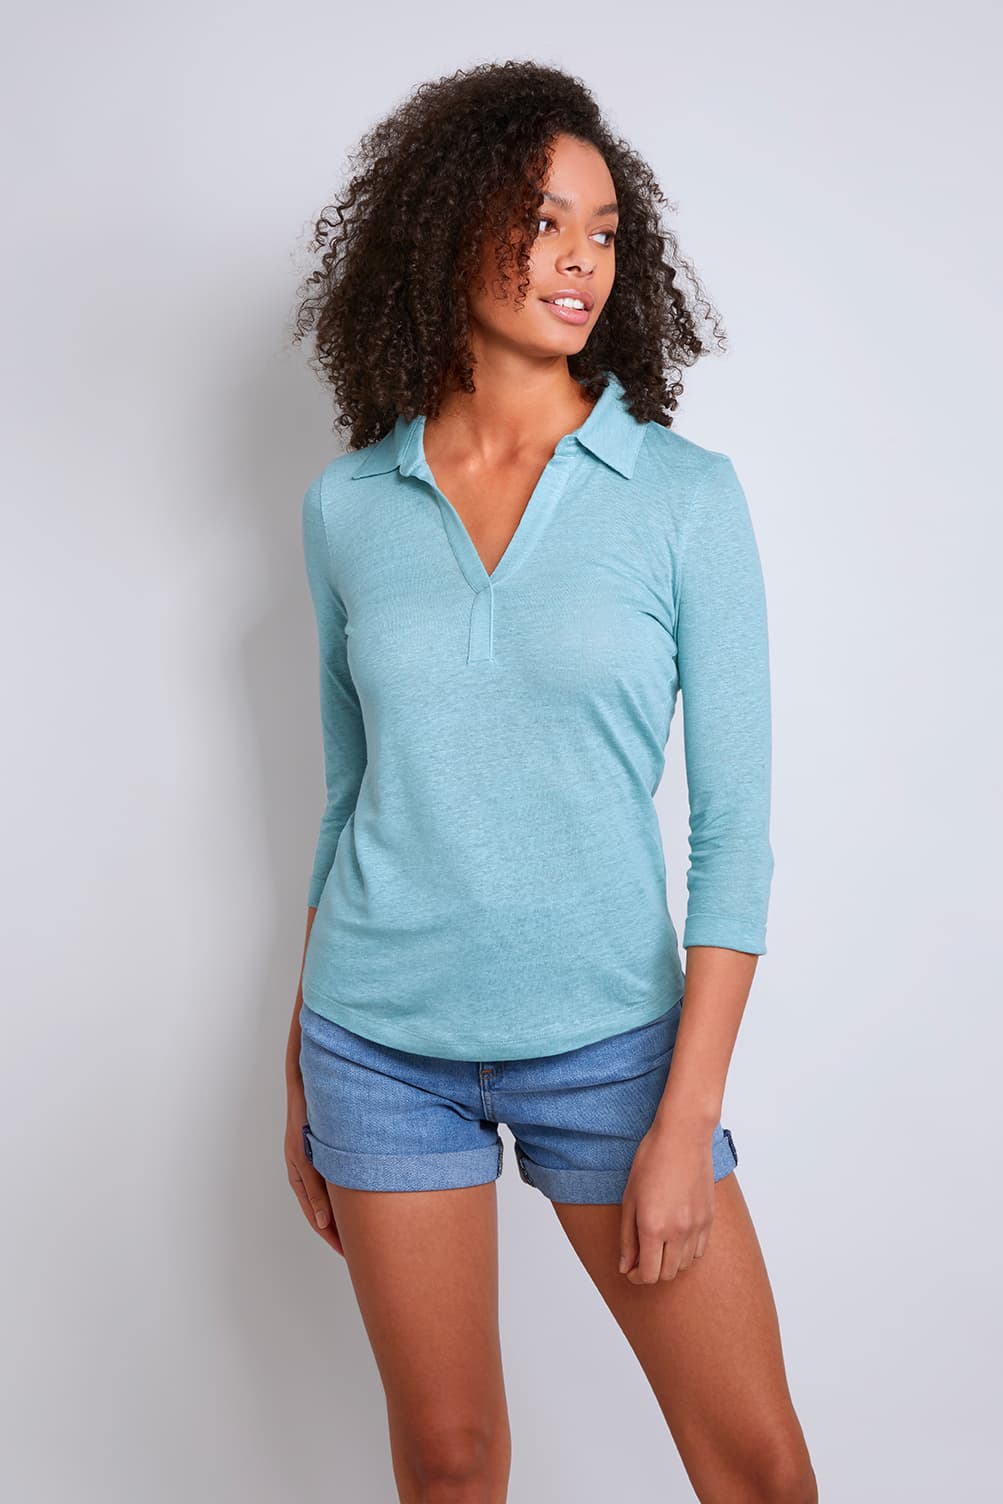 Women's 3/4 Sleeve Cotton Modal T-Shirts